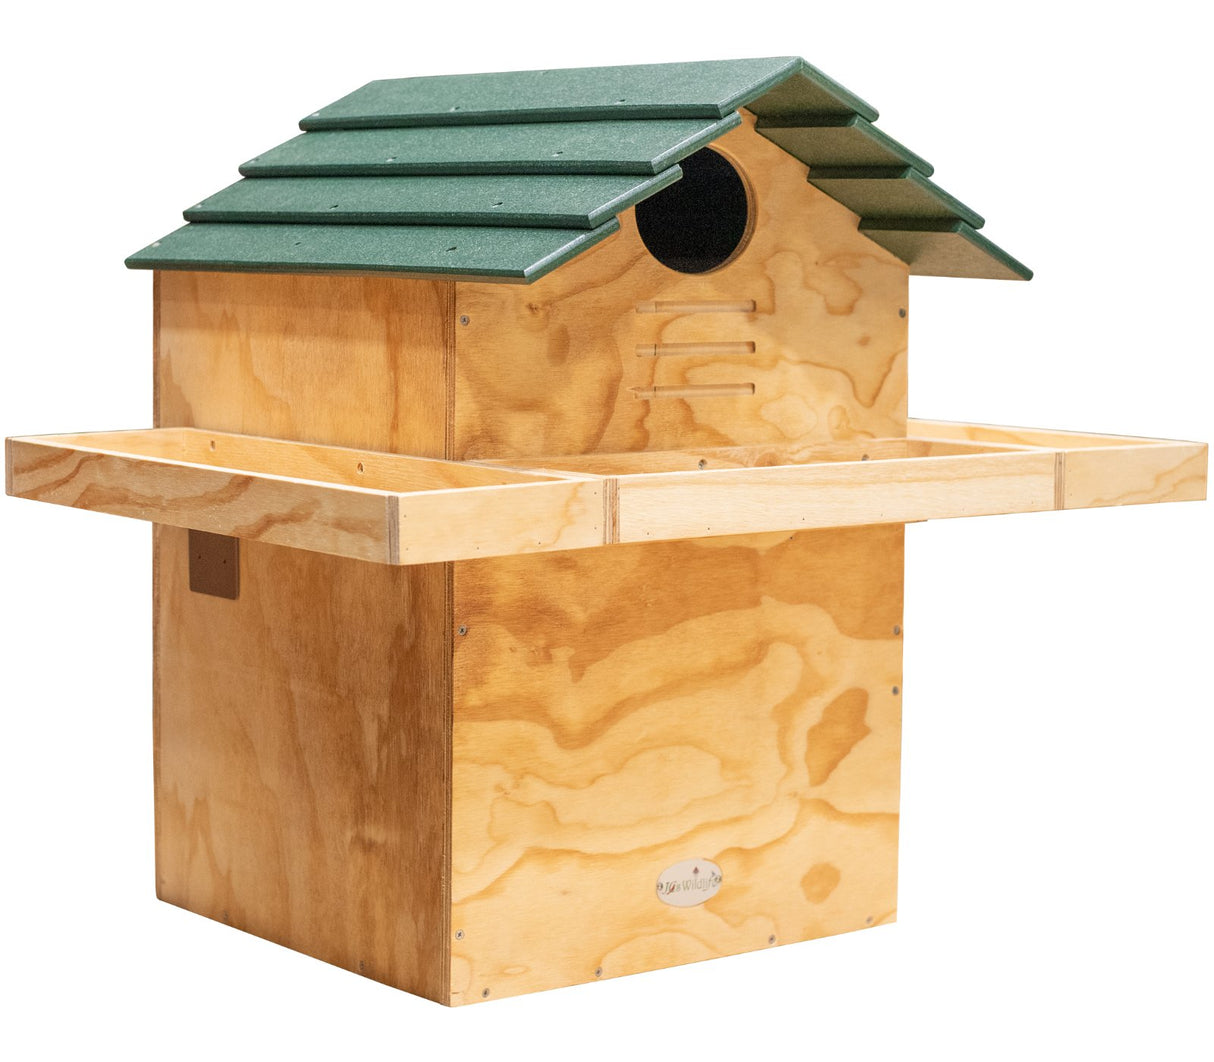 JCS Wildlife X Large Barn Owl Box with Poly Lumber Roof and Exercise Platform - JCS Wildlife